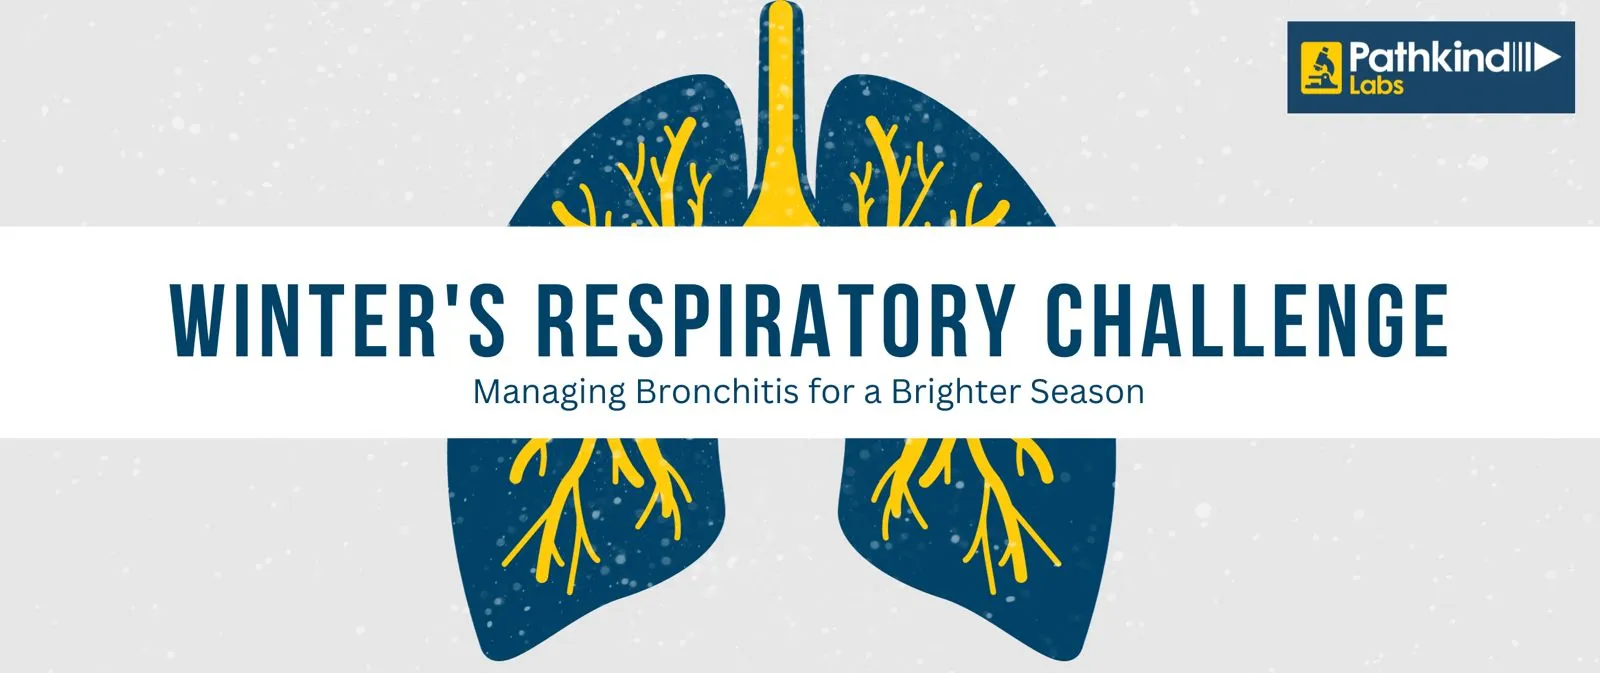 Winter's Respiratory Challenge: Managing Bronchitis for a Brighter Season